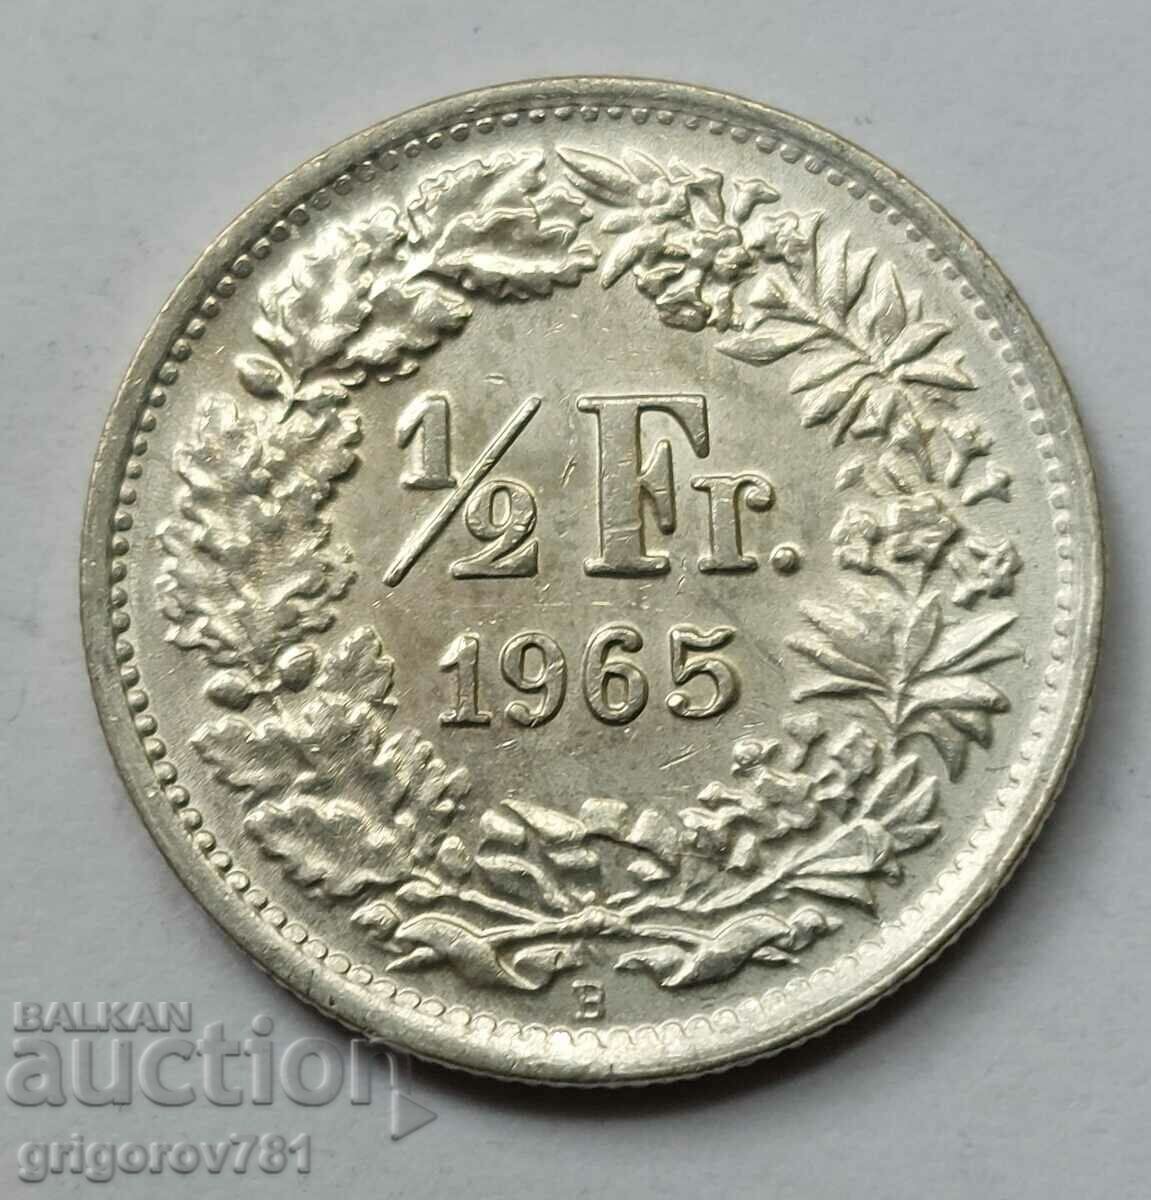 1/2 Franc Argint Elveția 1965 B - Monedă de argint #83